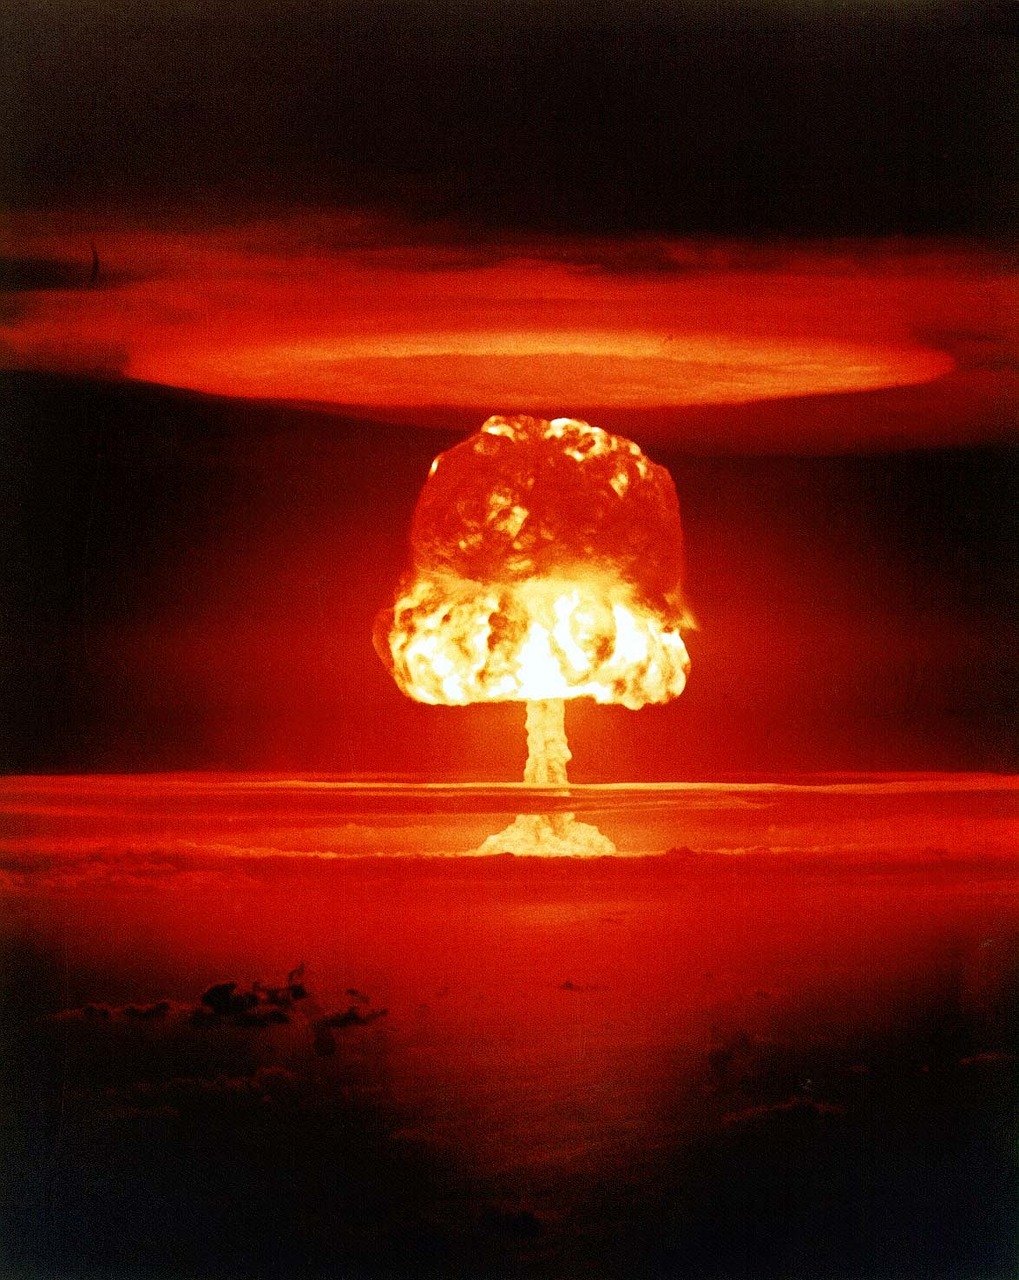 atomic bomb mushroom cloud explosion free photo